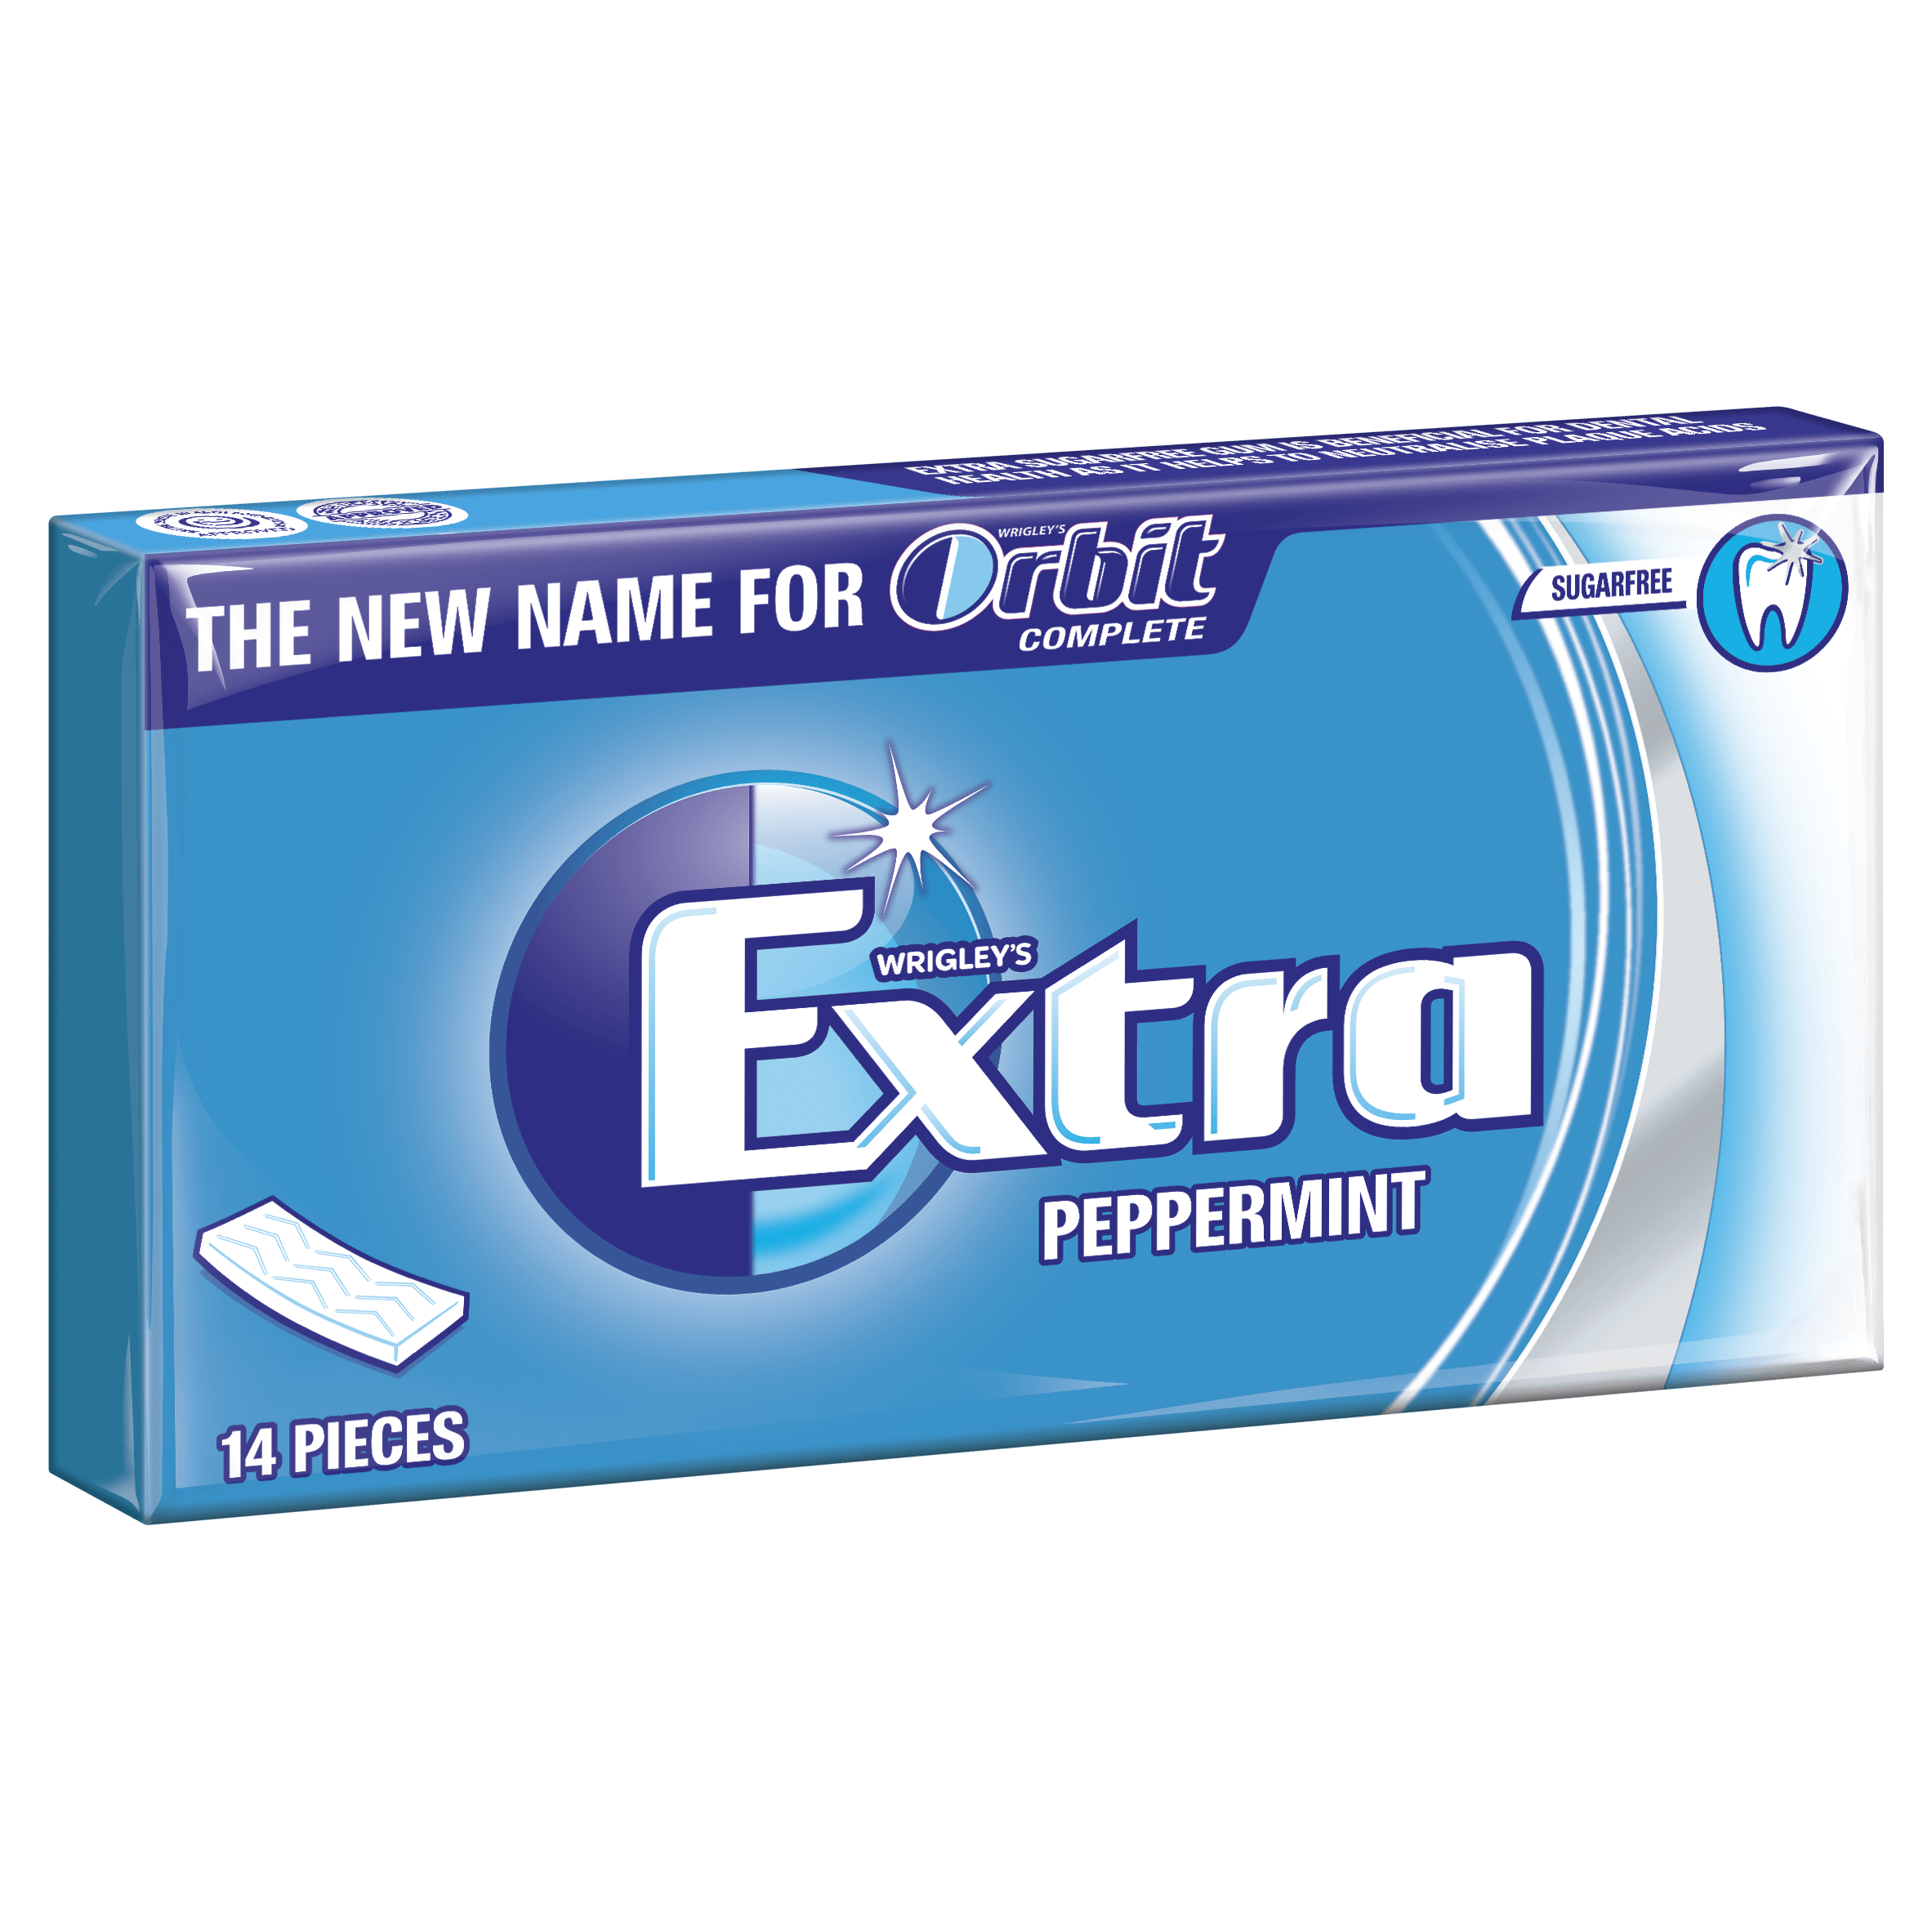 Extra Gum Logo - Wrigley Orbit merges into Extra range